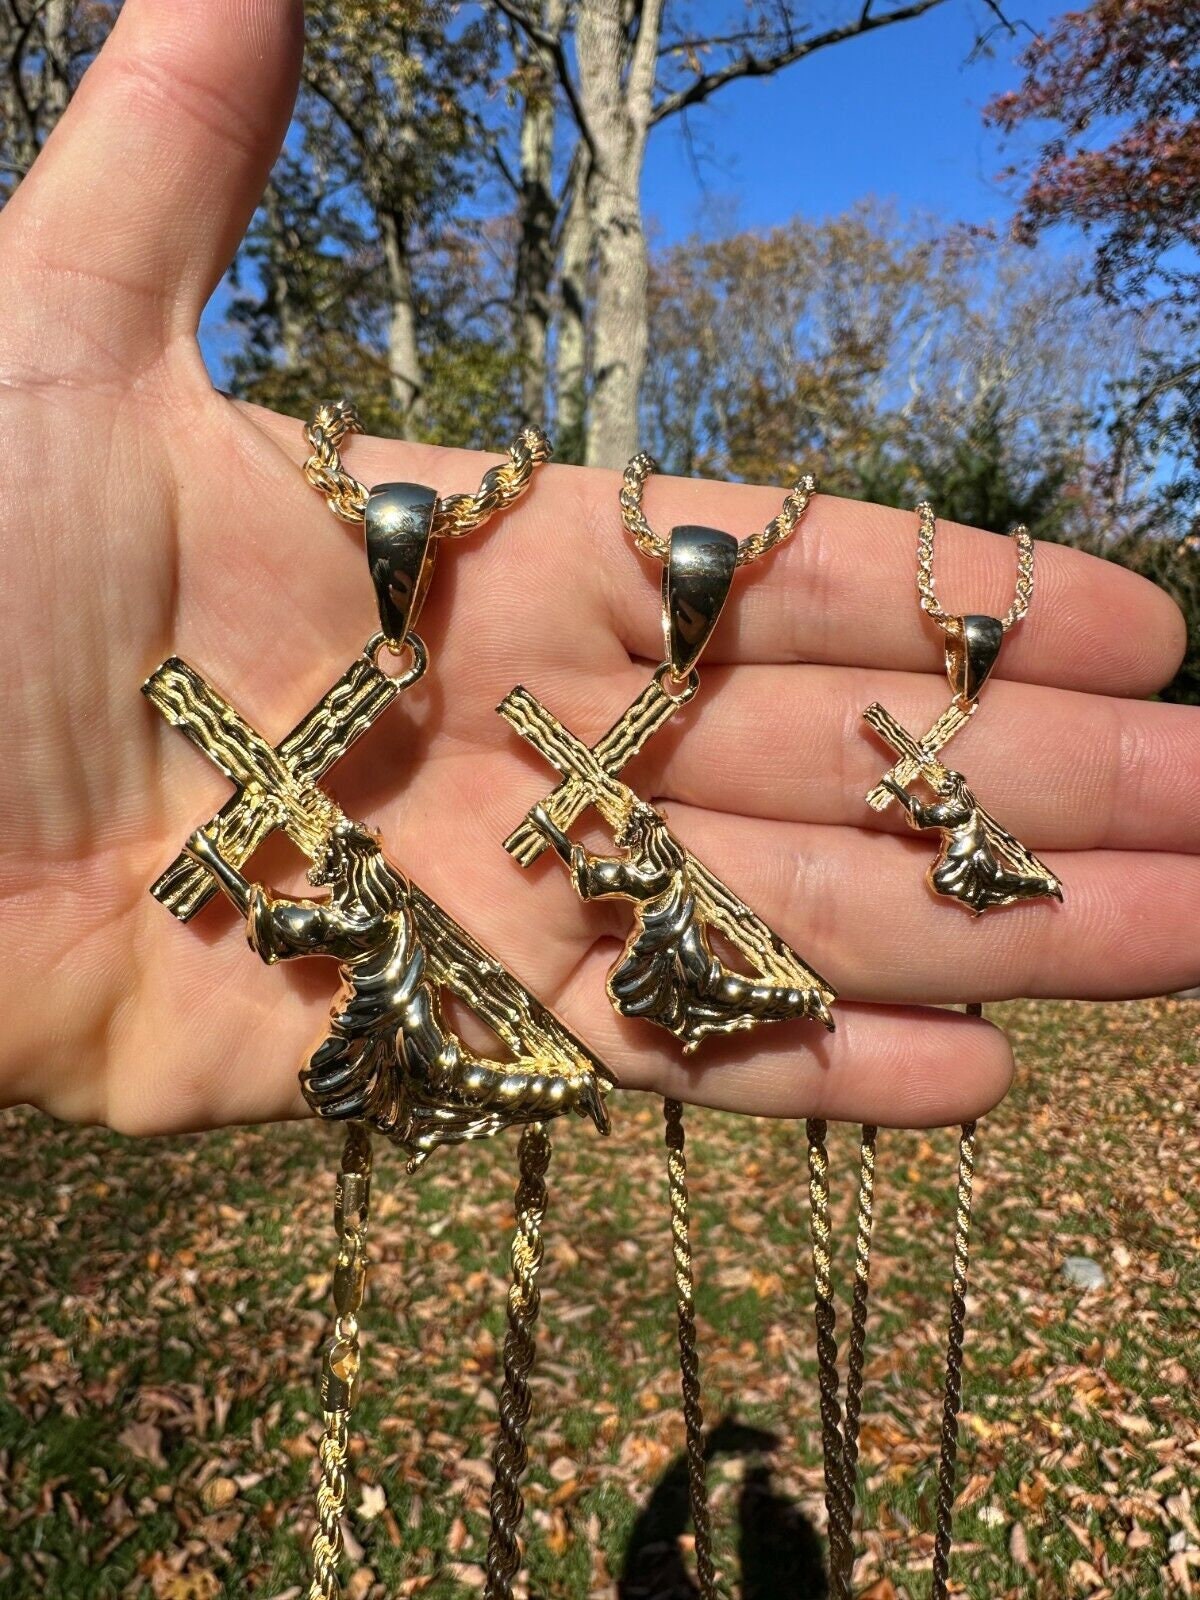 14k Gold Rope Chain Necklace Jesus Cross Charm Pendant CZ Set 18